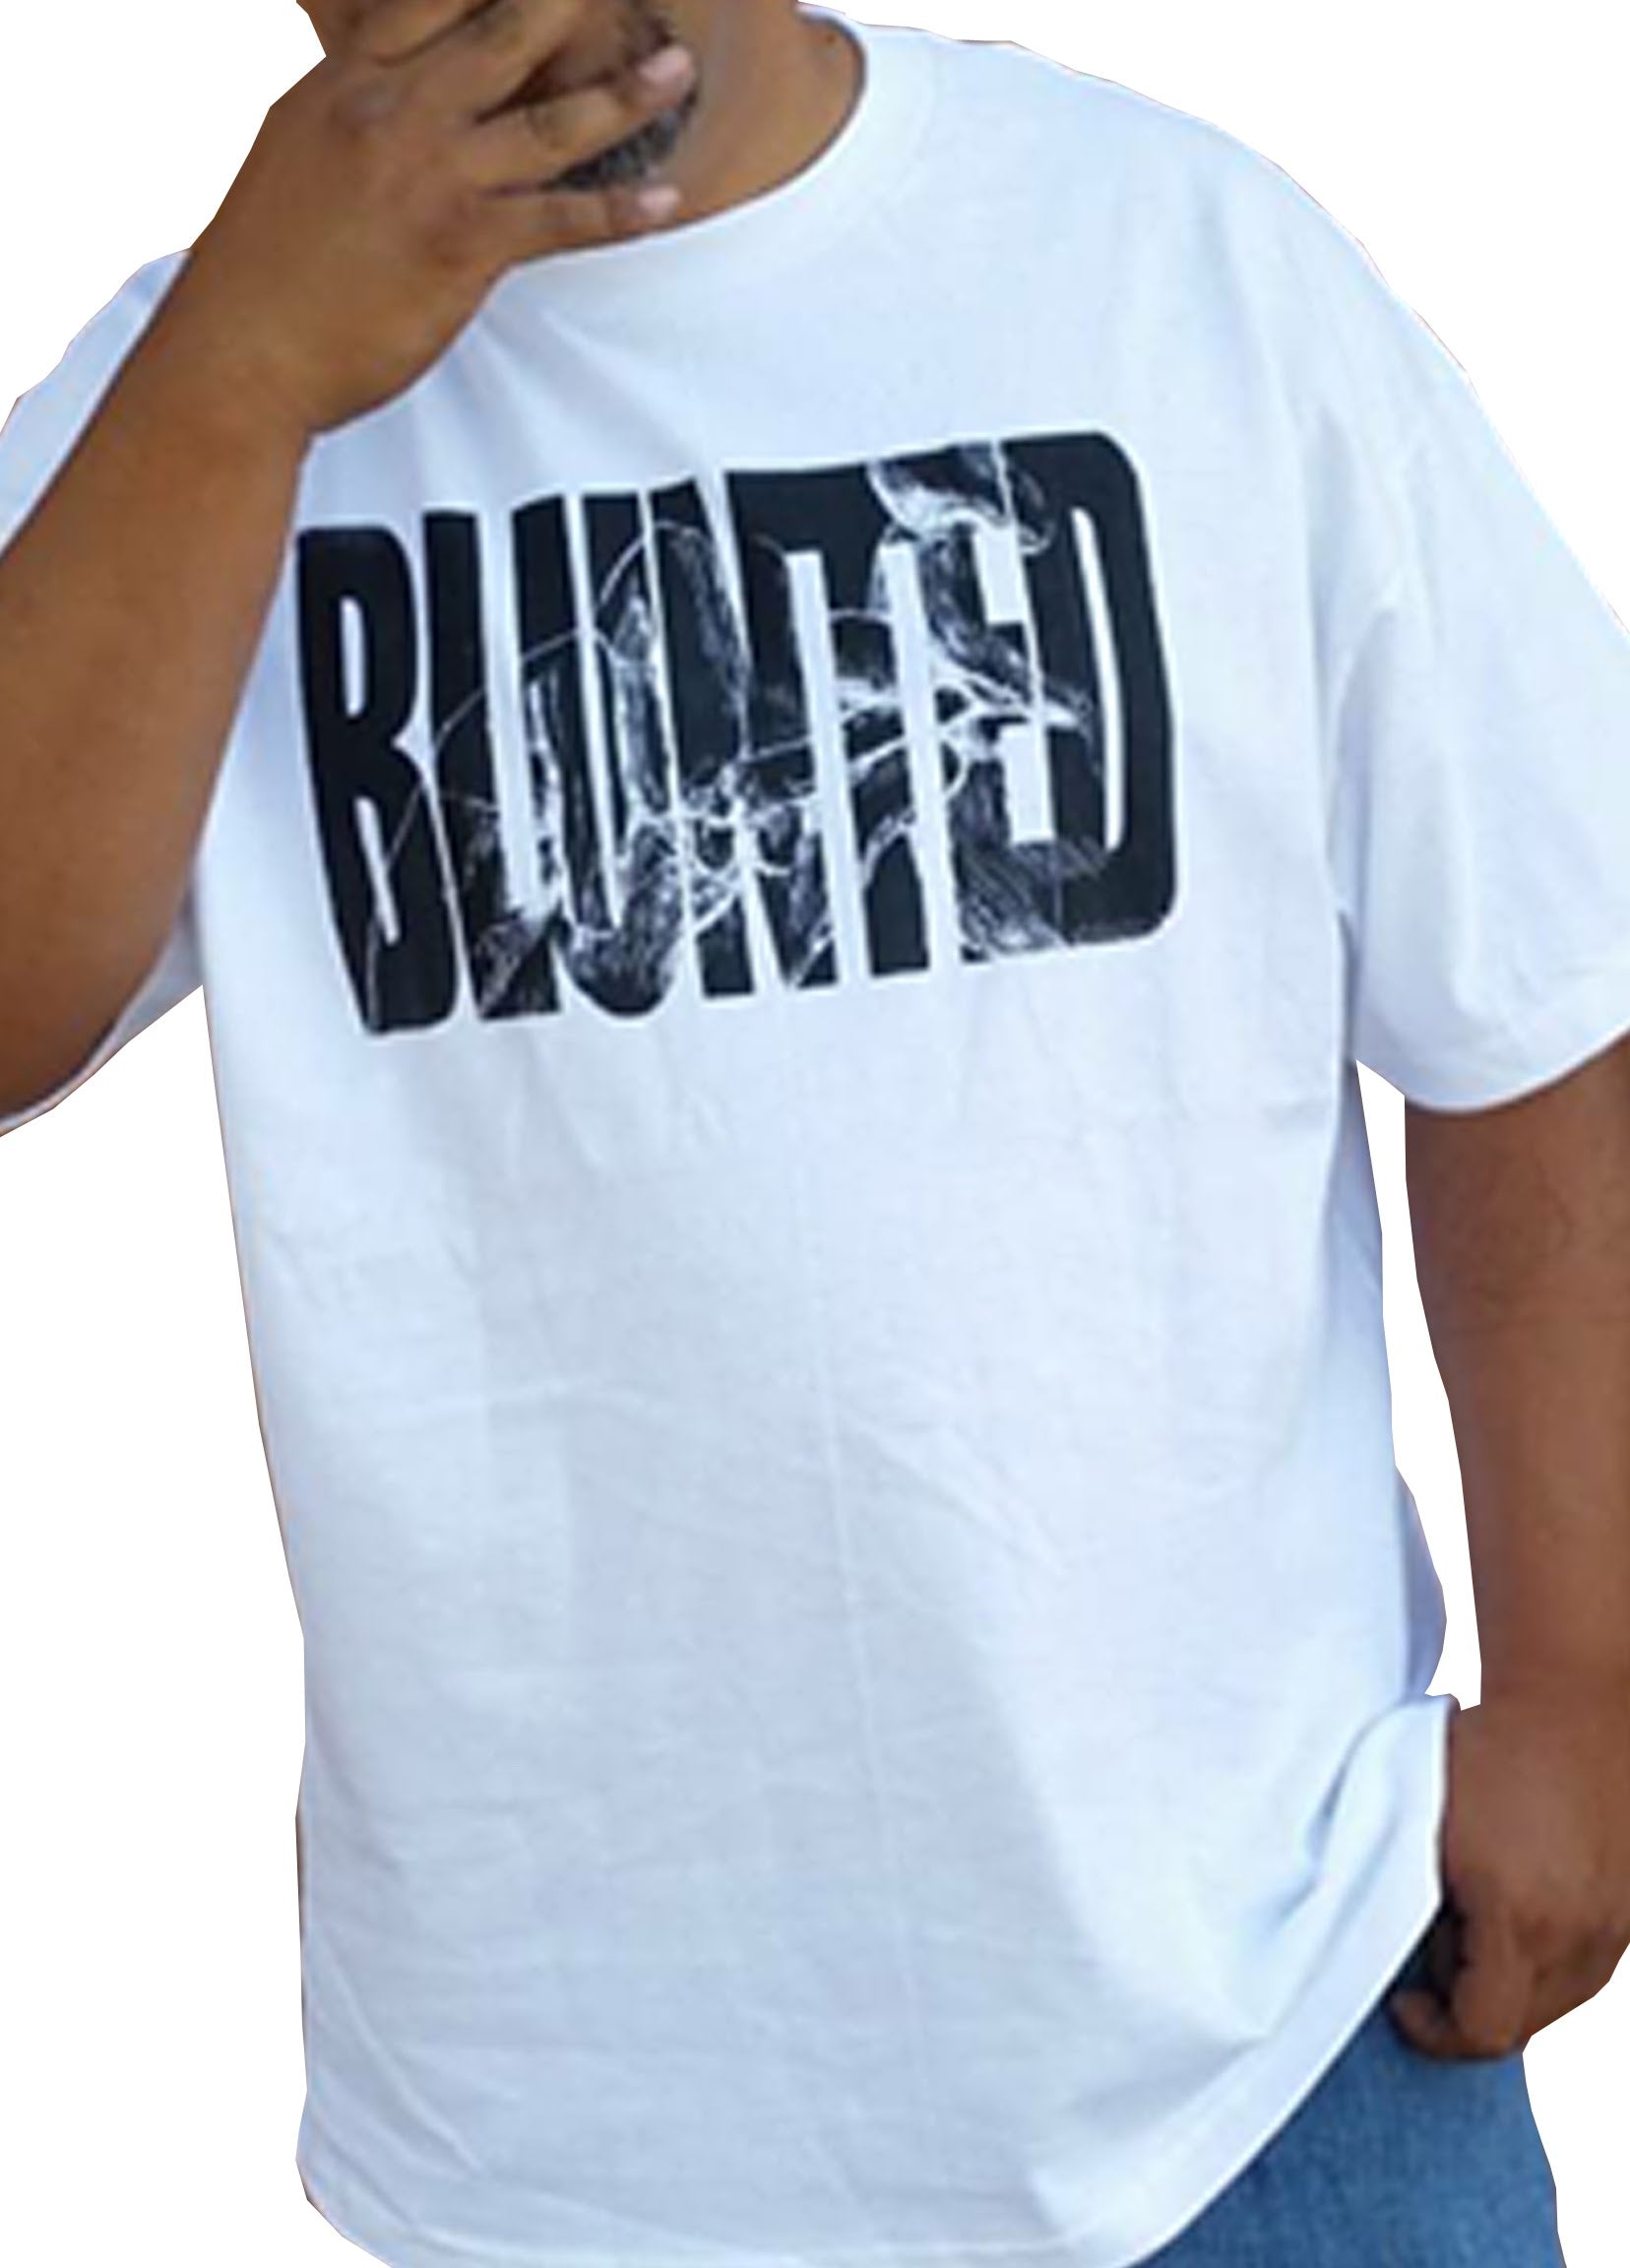 Men's "Blunted" White T-shirt